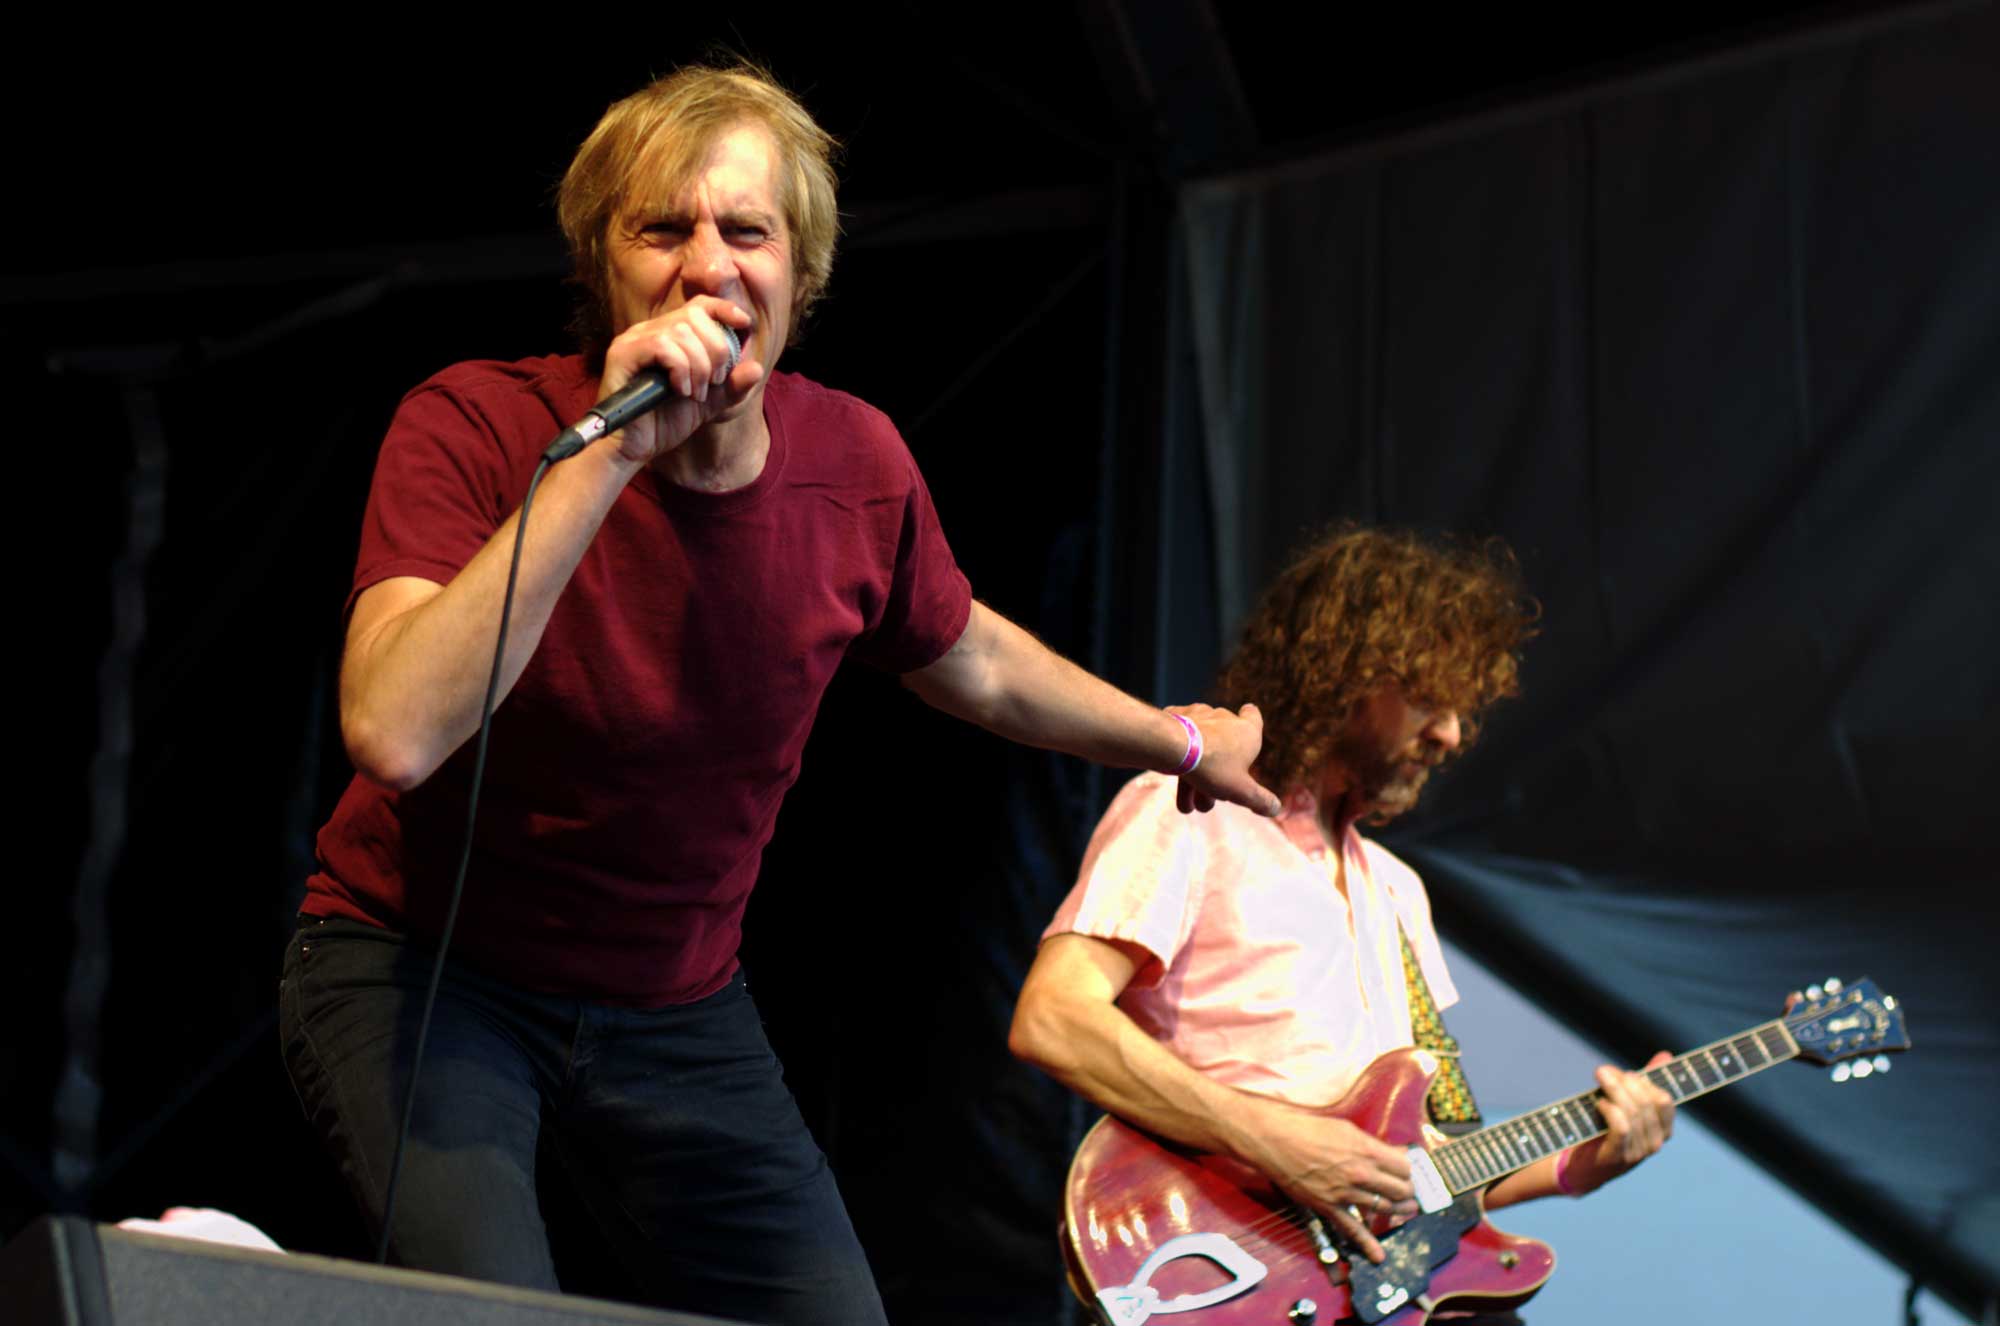 Mark Arm i Steve Turner del grup de grunge i punk Mudhoney, actuant al Primavera Sound 2016